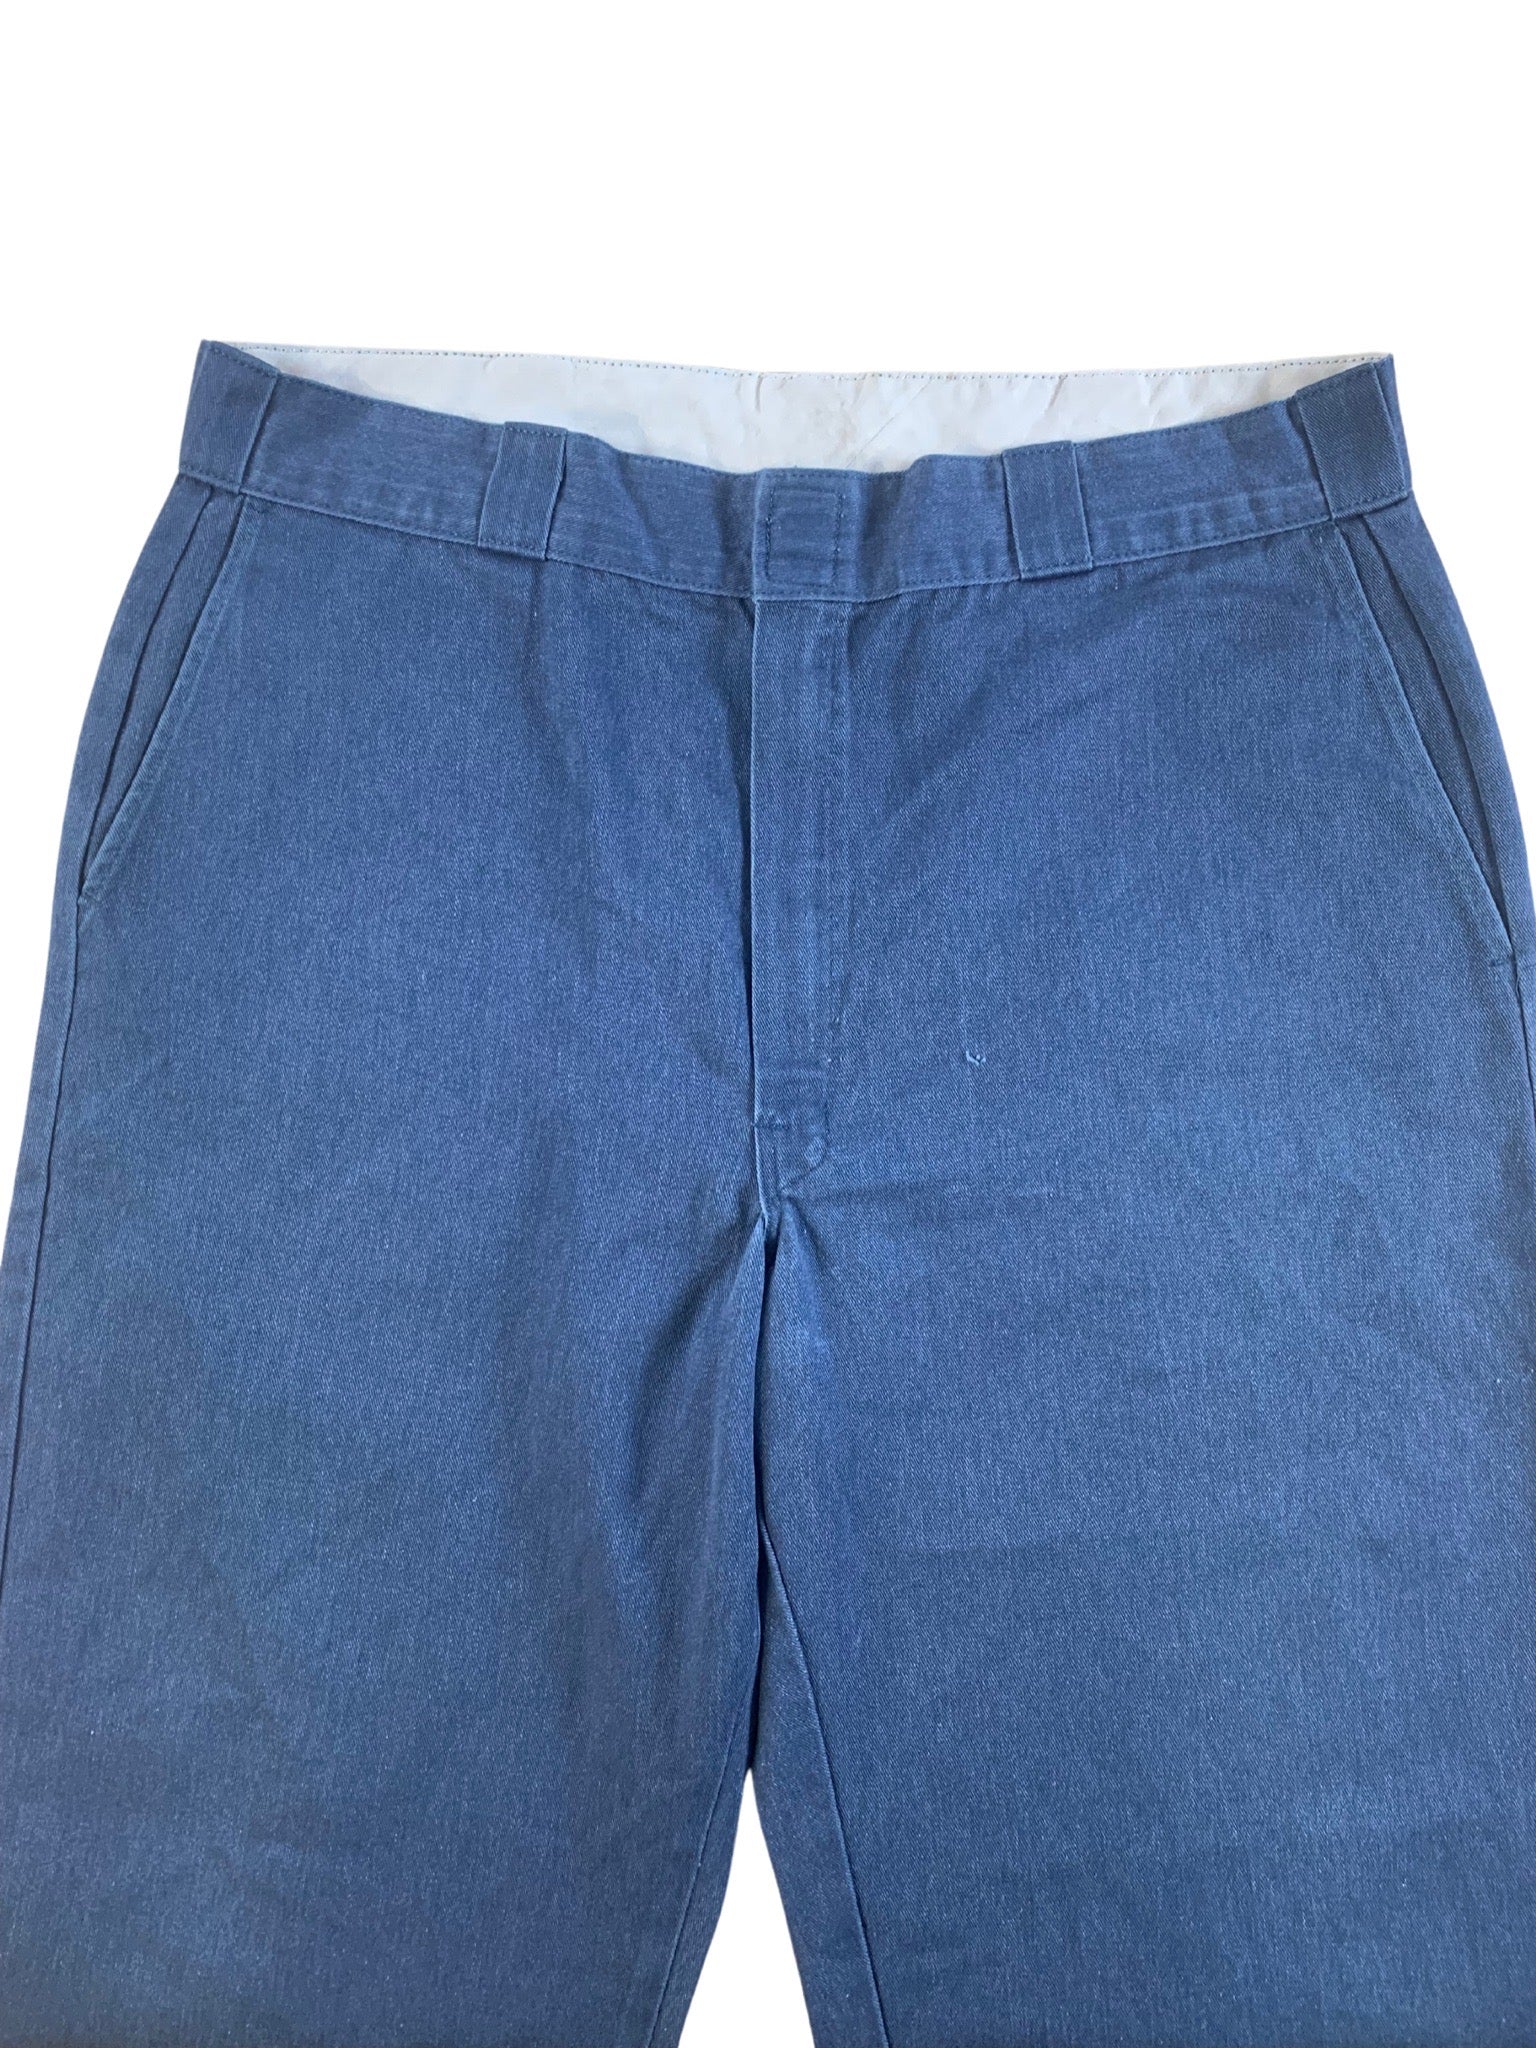 1x Vintage DICKIES Navy Blue Straight Leg Trousers - Waist 34 - Length 30 - Vintage Superstore Online